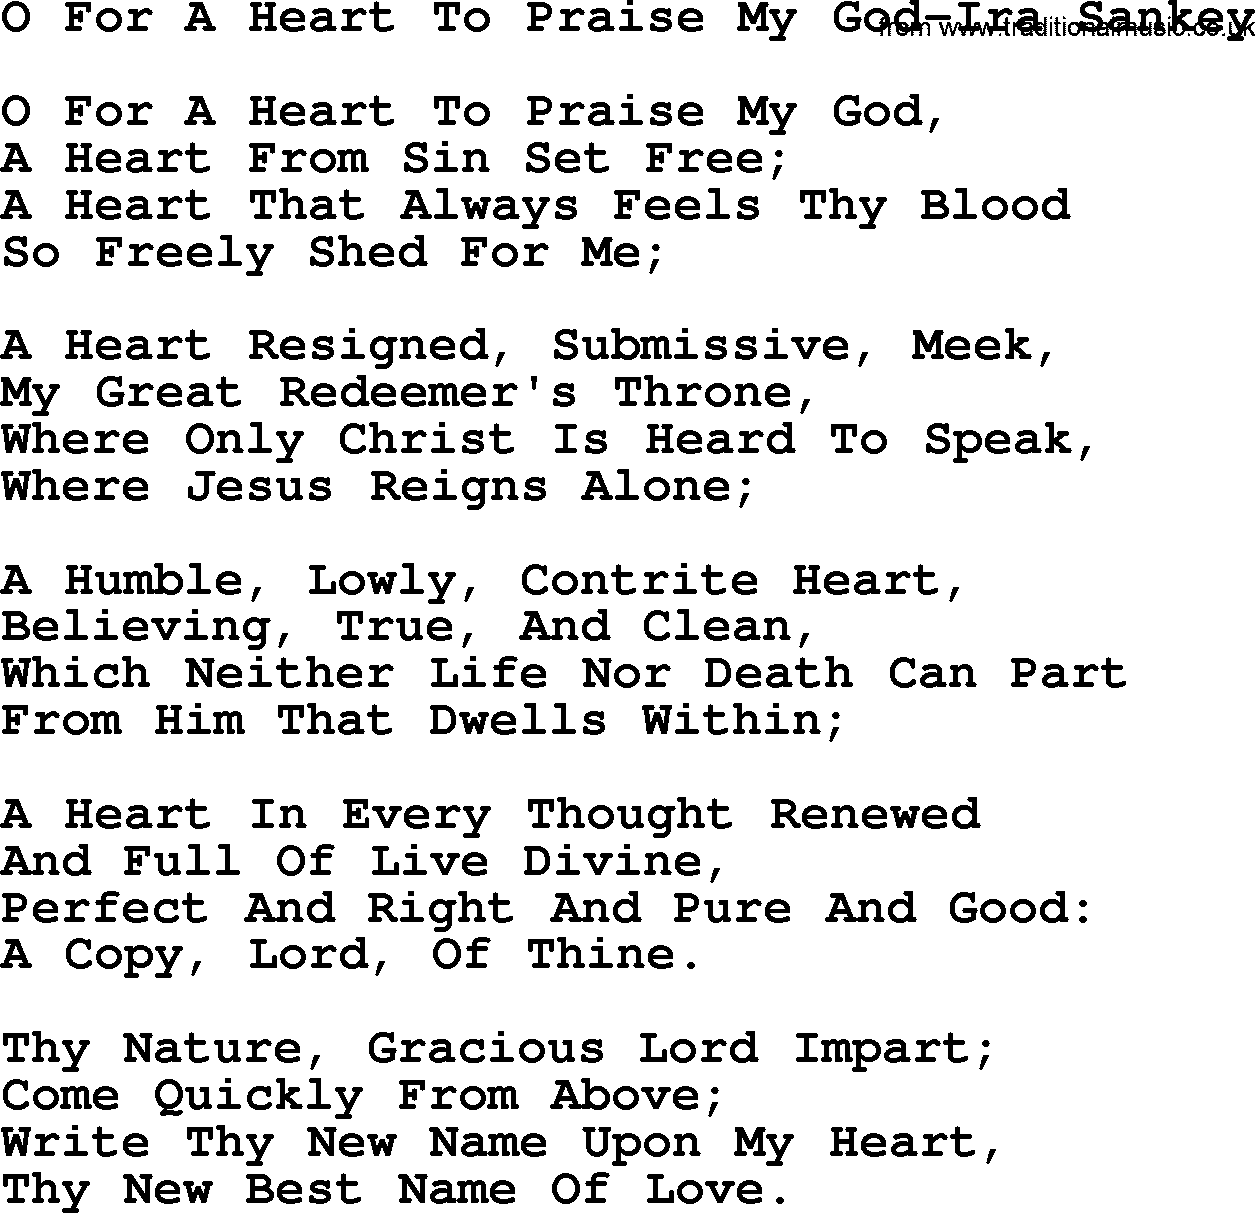 Ira Sankey hymn: O For A Heart To Praise My God-Ira Sankey, lyrics